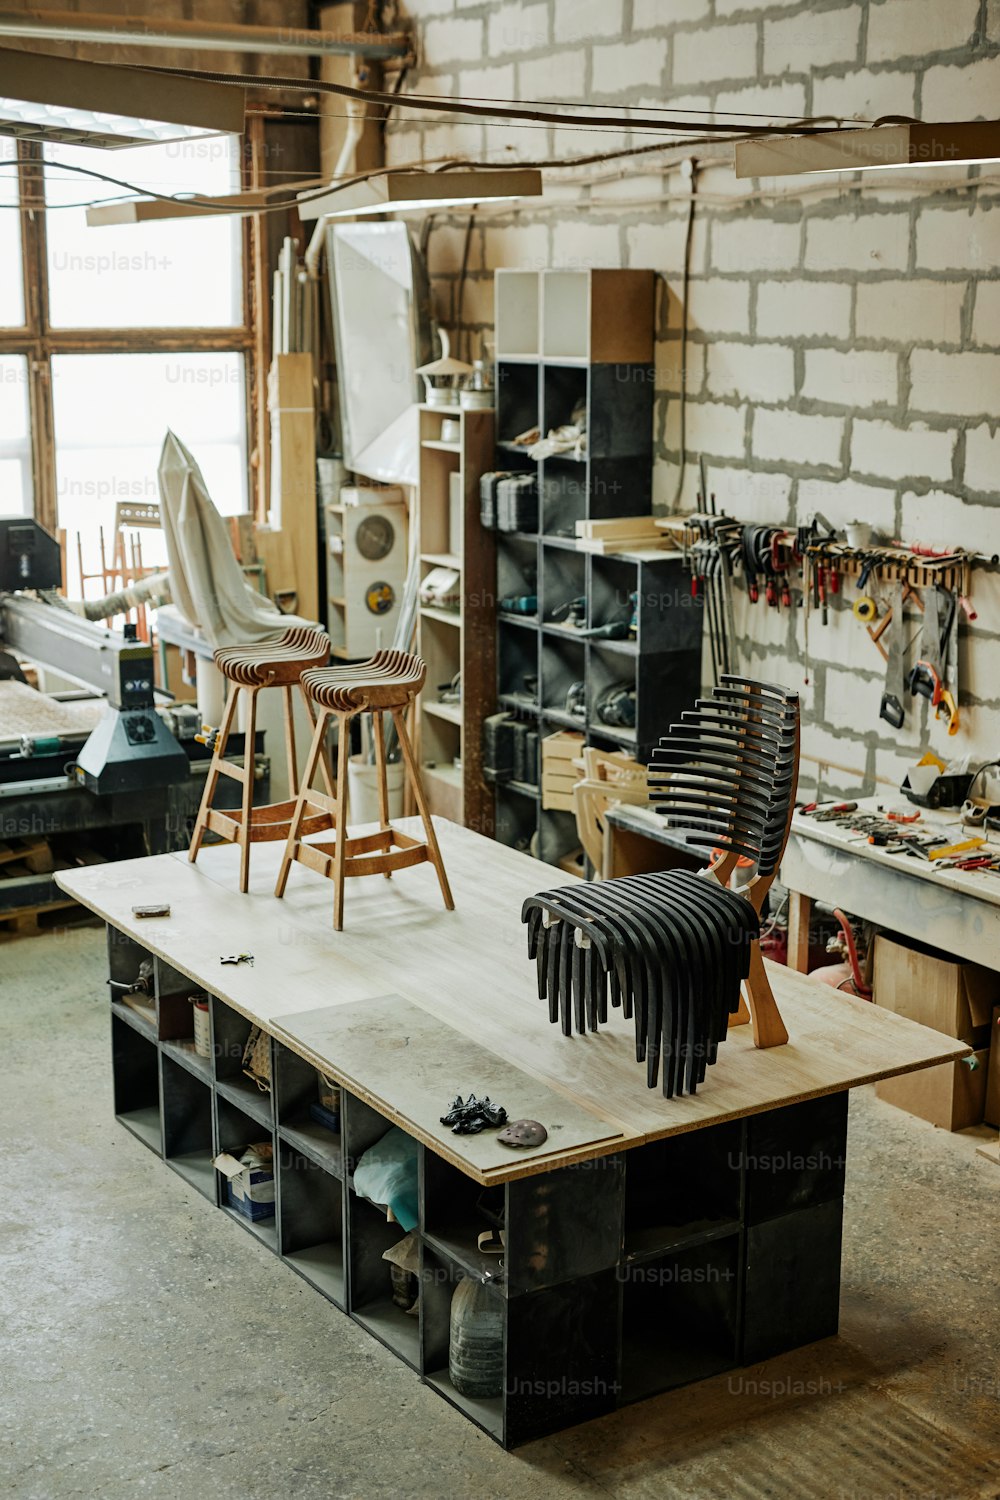 Vertical background image of artisan carpentry workshop in warm tones with focus on handcrafted designer furniture